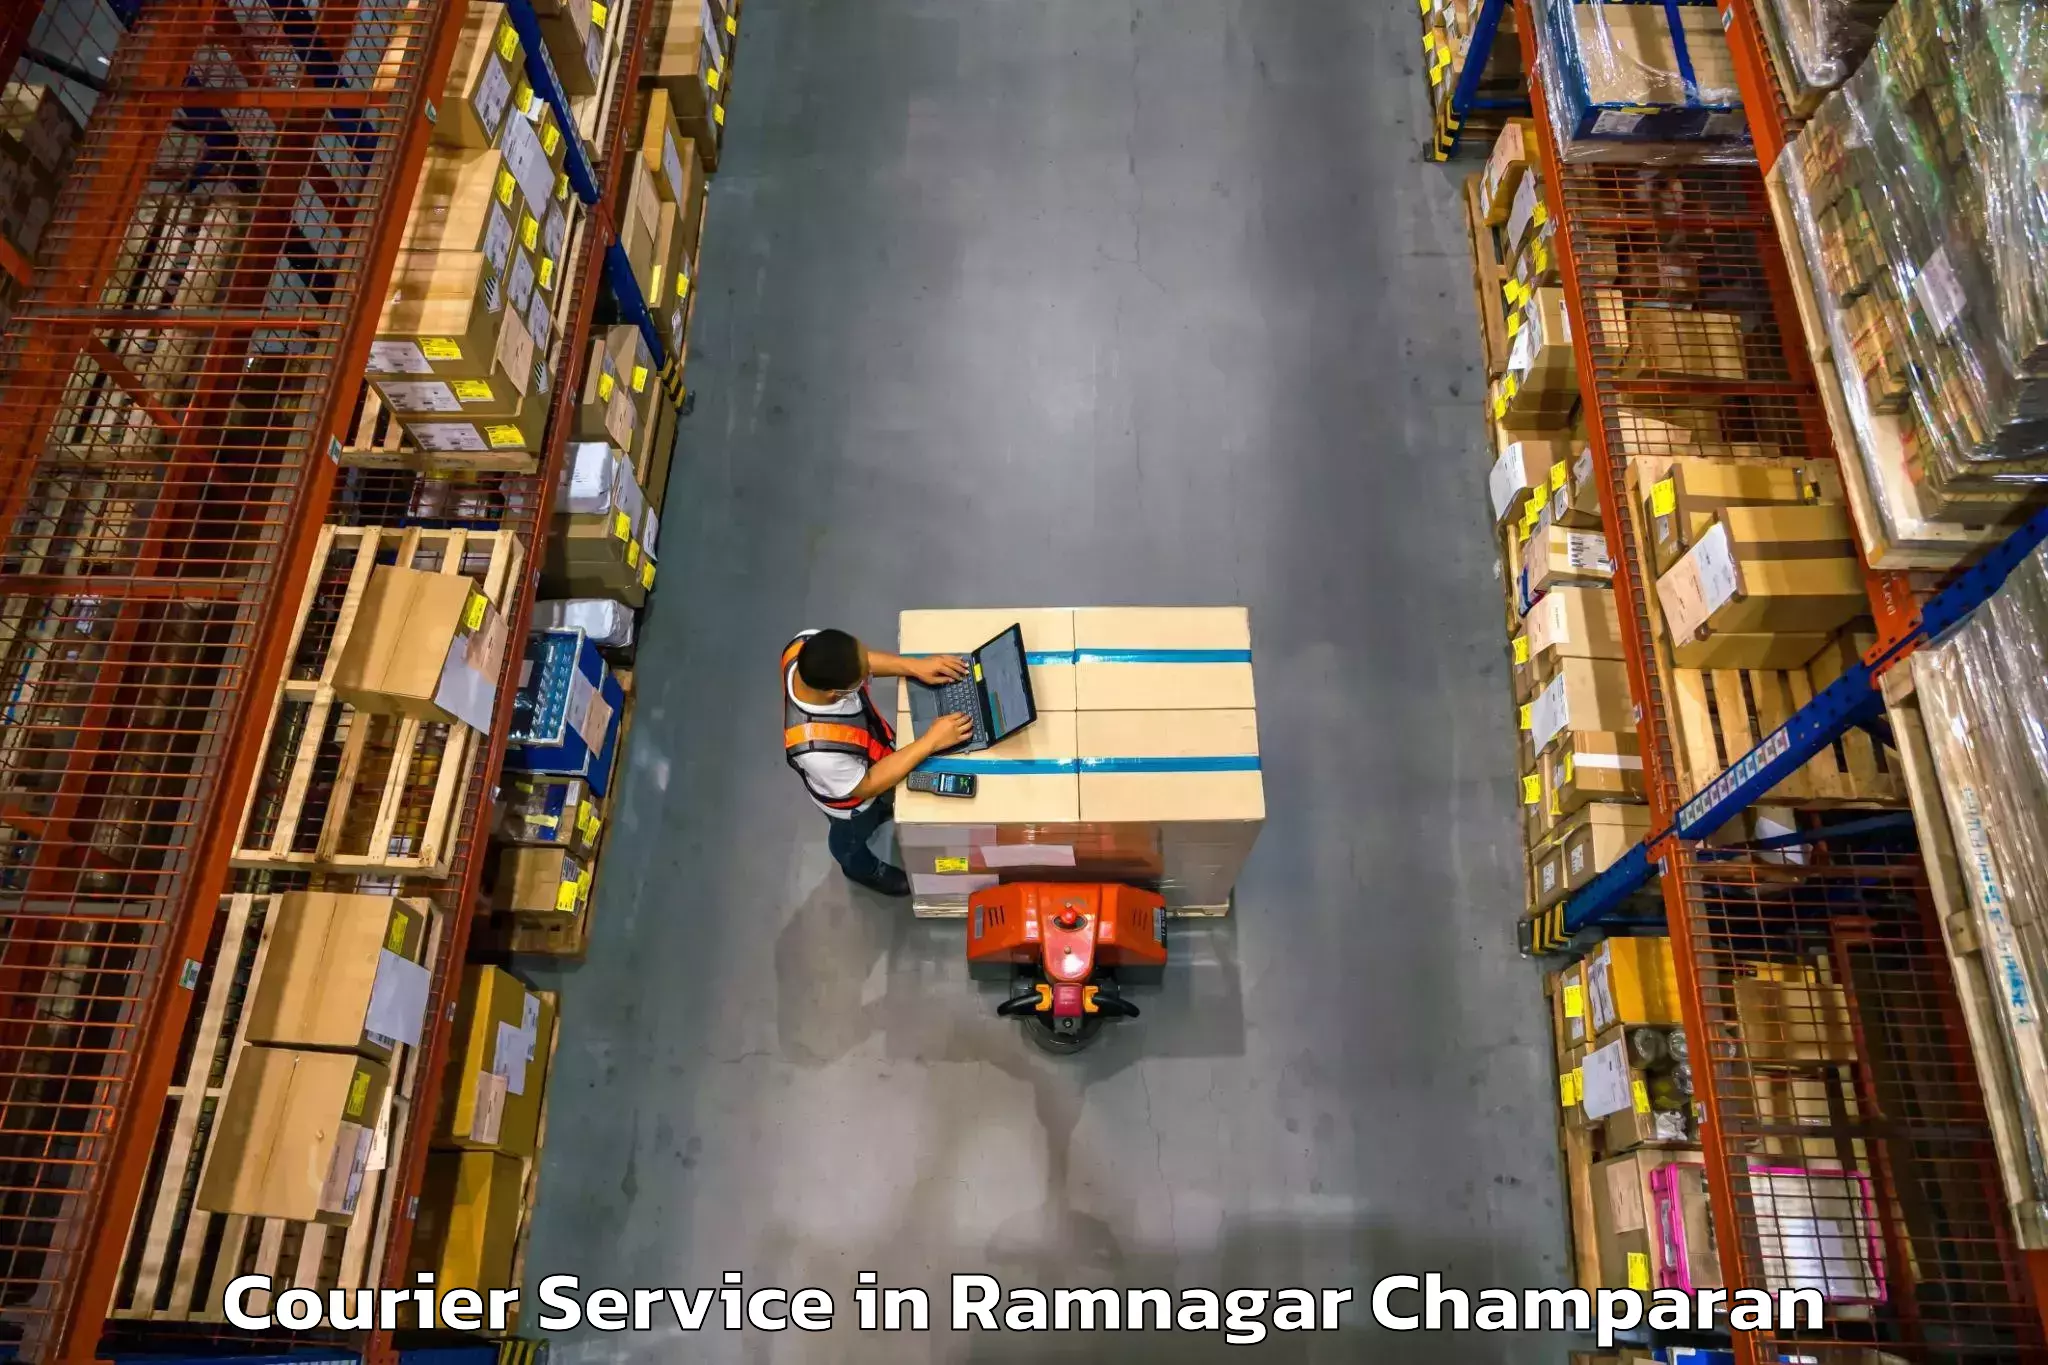 Flexible parcel services in Ramnagar Champaran